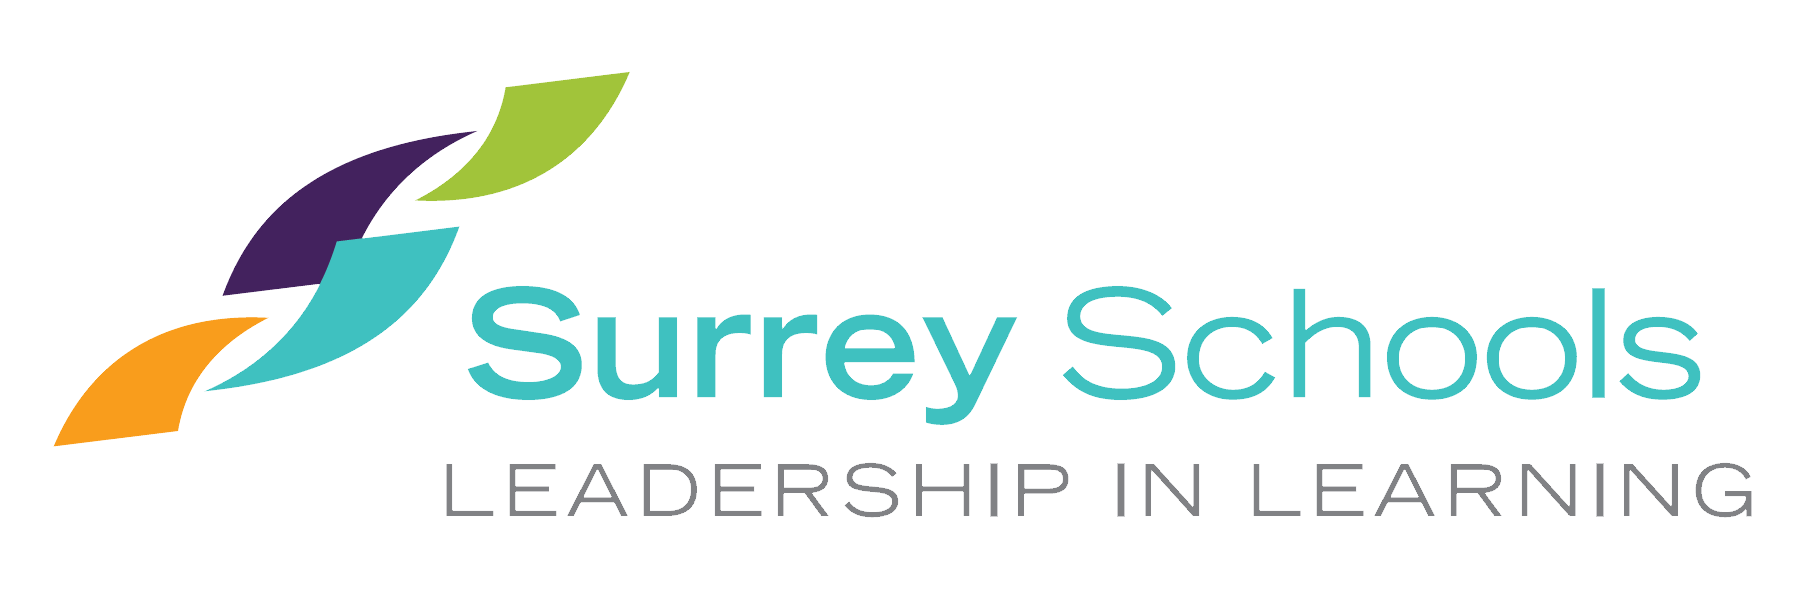 surrey schools logo.43e97264549